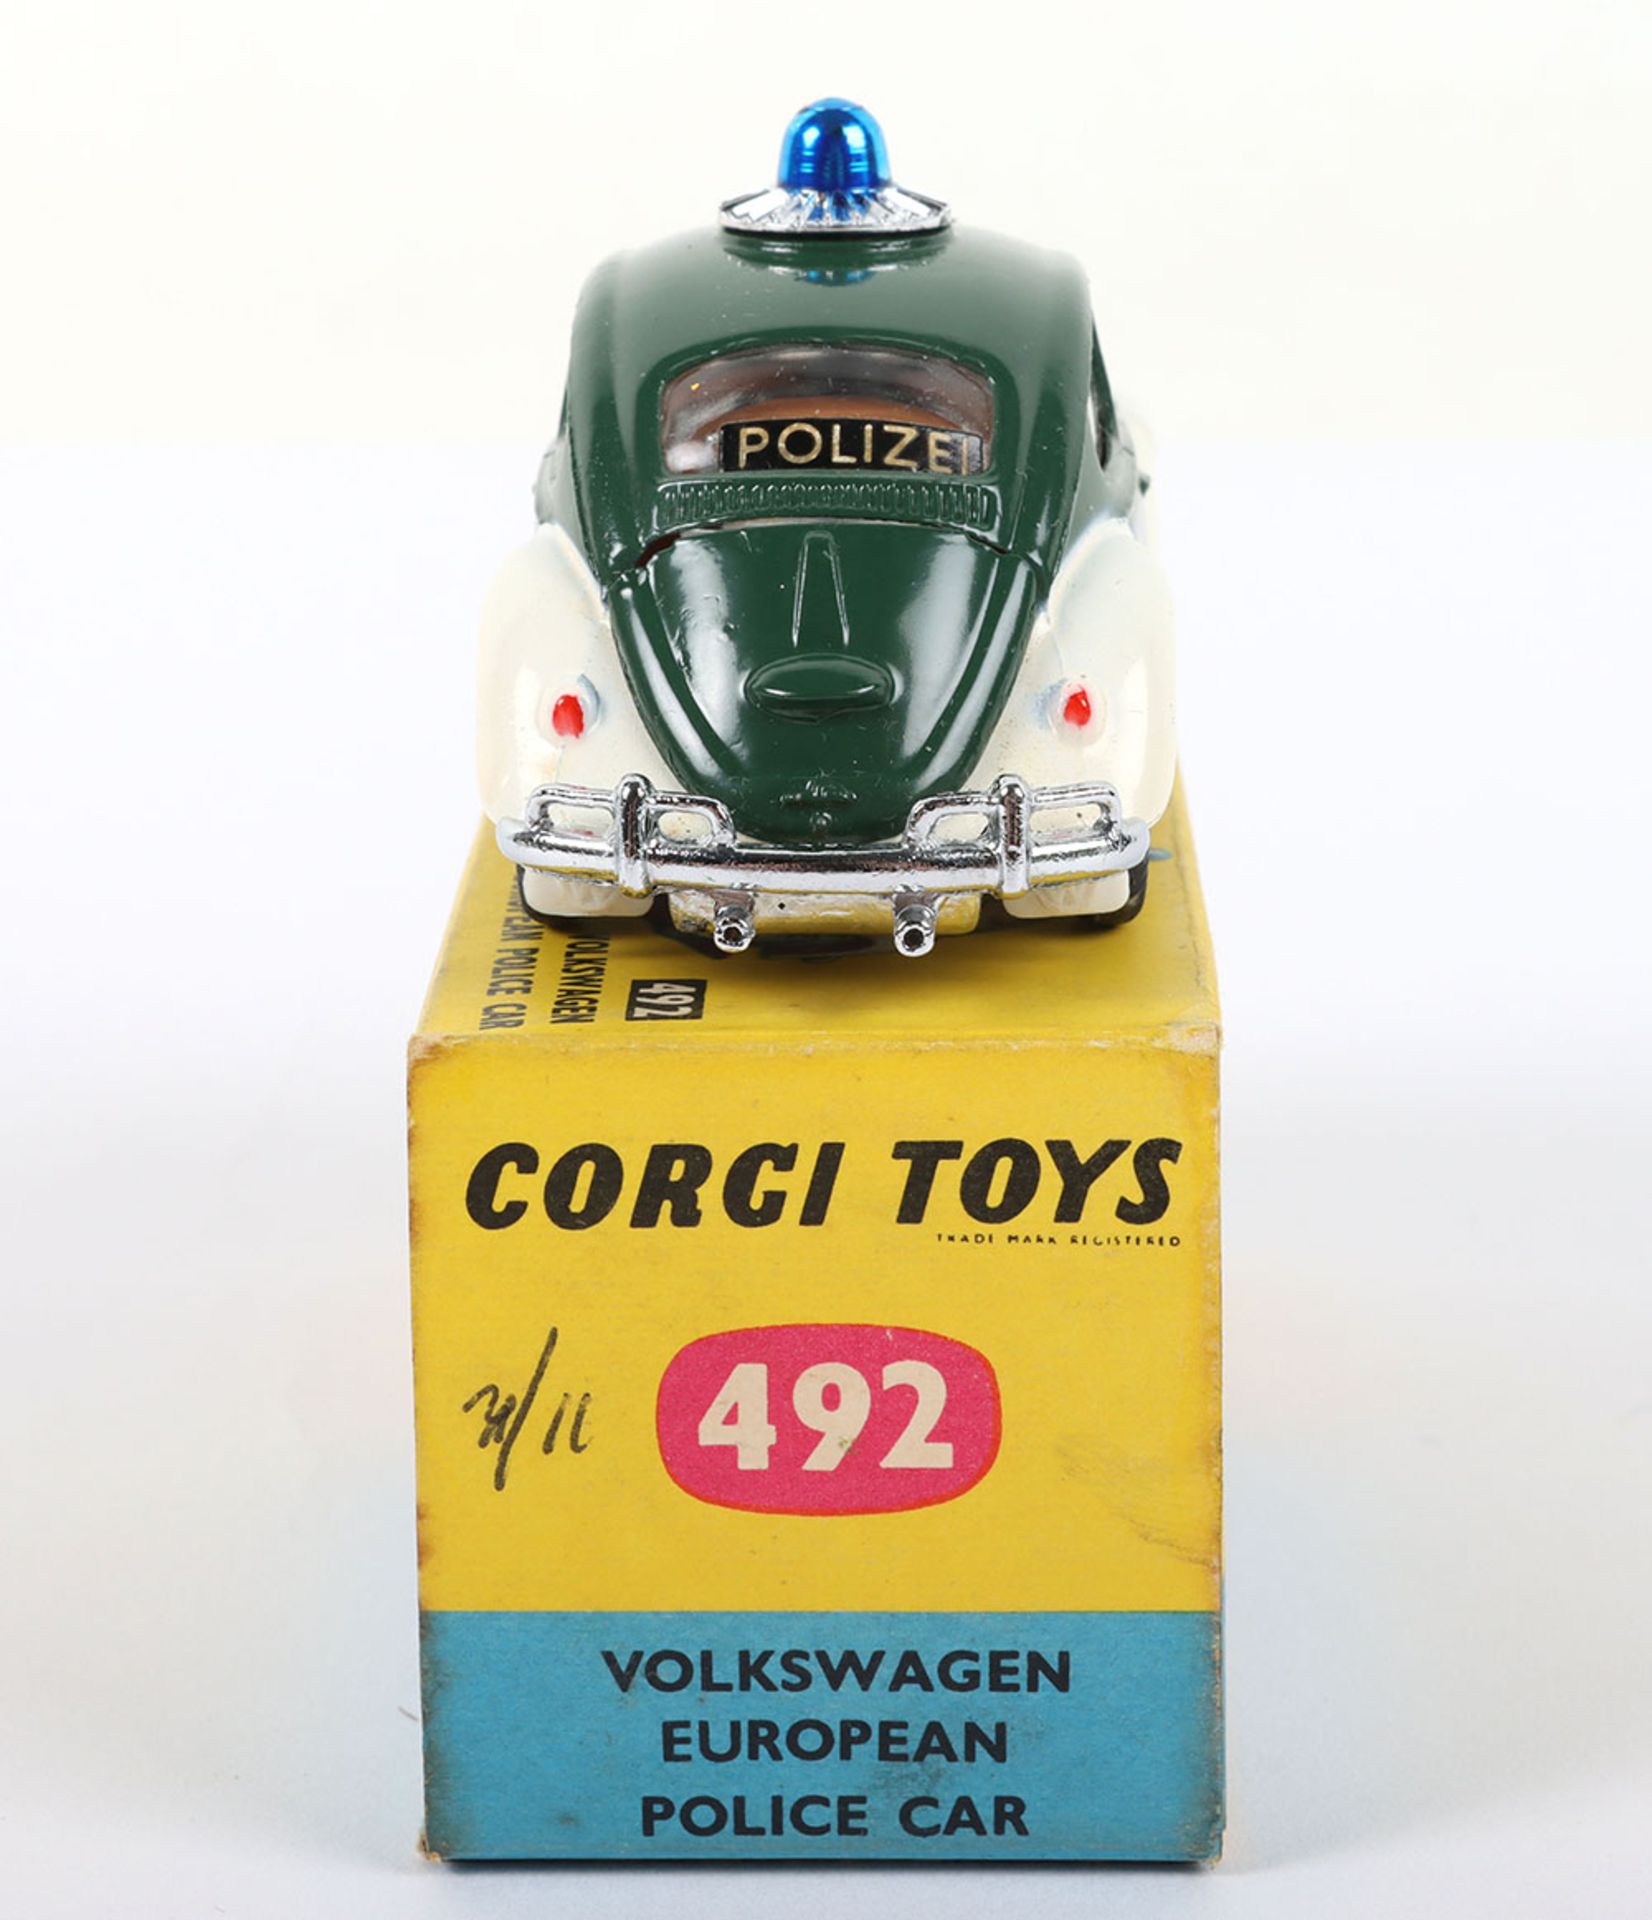 Corgi Toys 492 Volkswagen European Police Car - Image 5 of 6